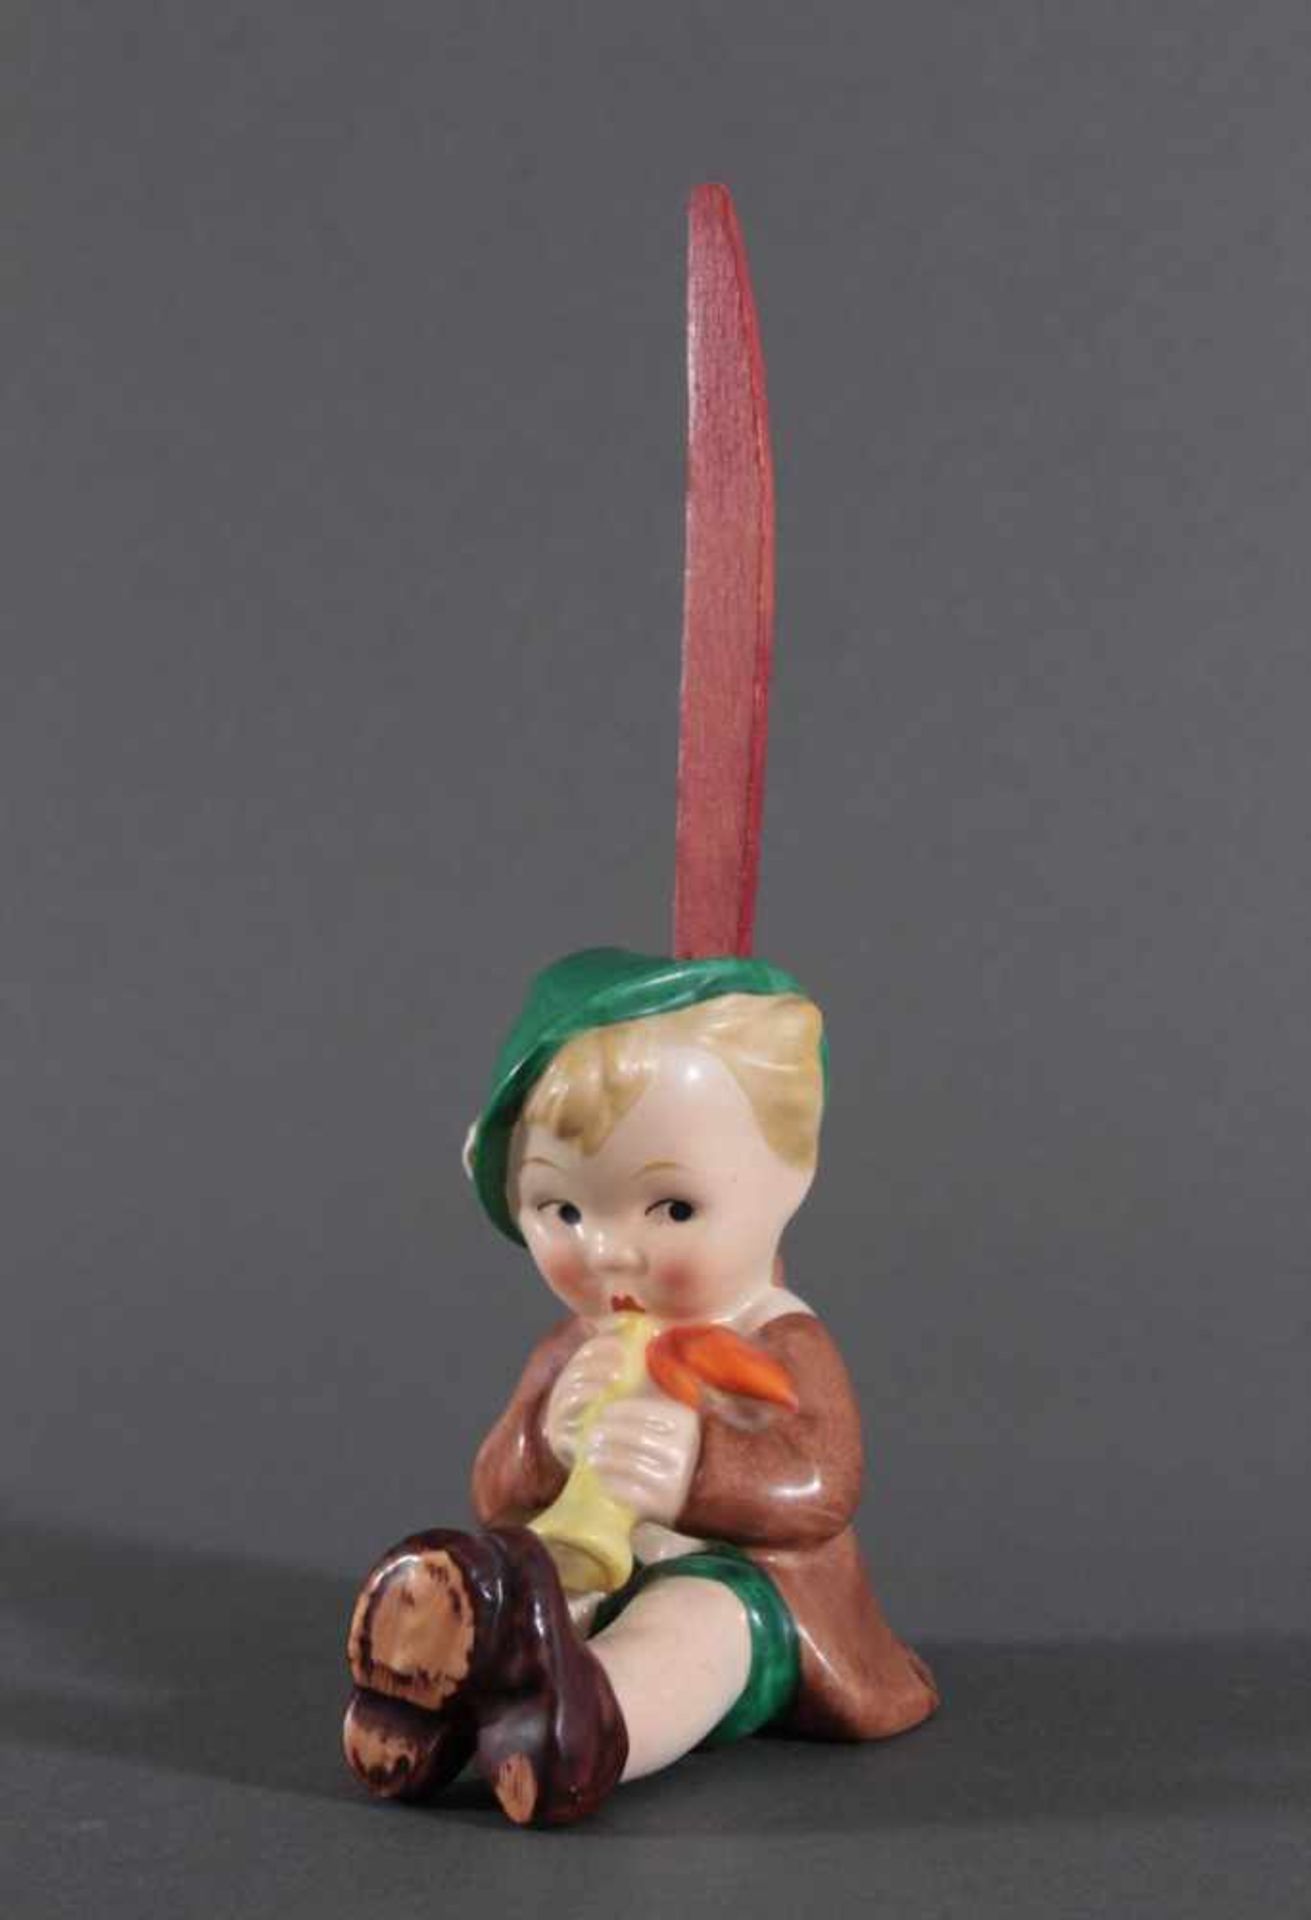 Hummelfigur, Goebel Brezelhalter "Junge mit Flöte" aus den 1940er JahrenModellnummer KF 25,